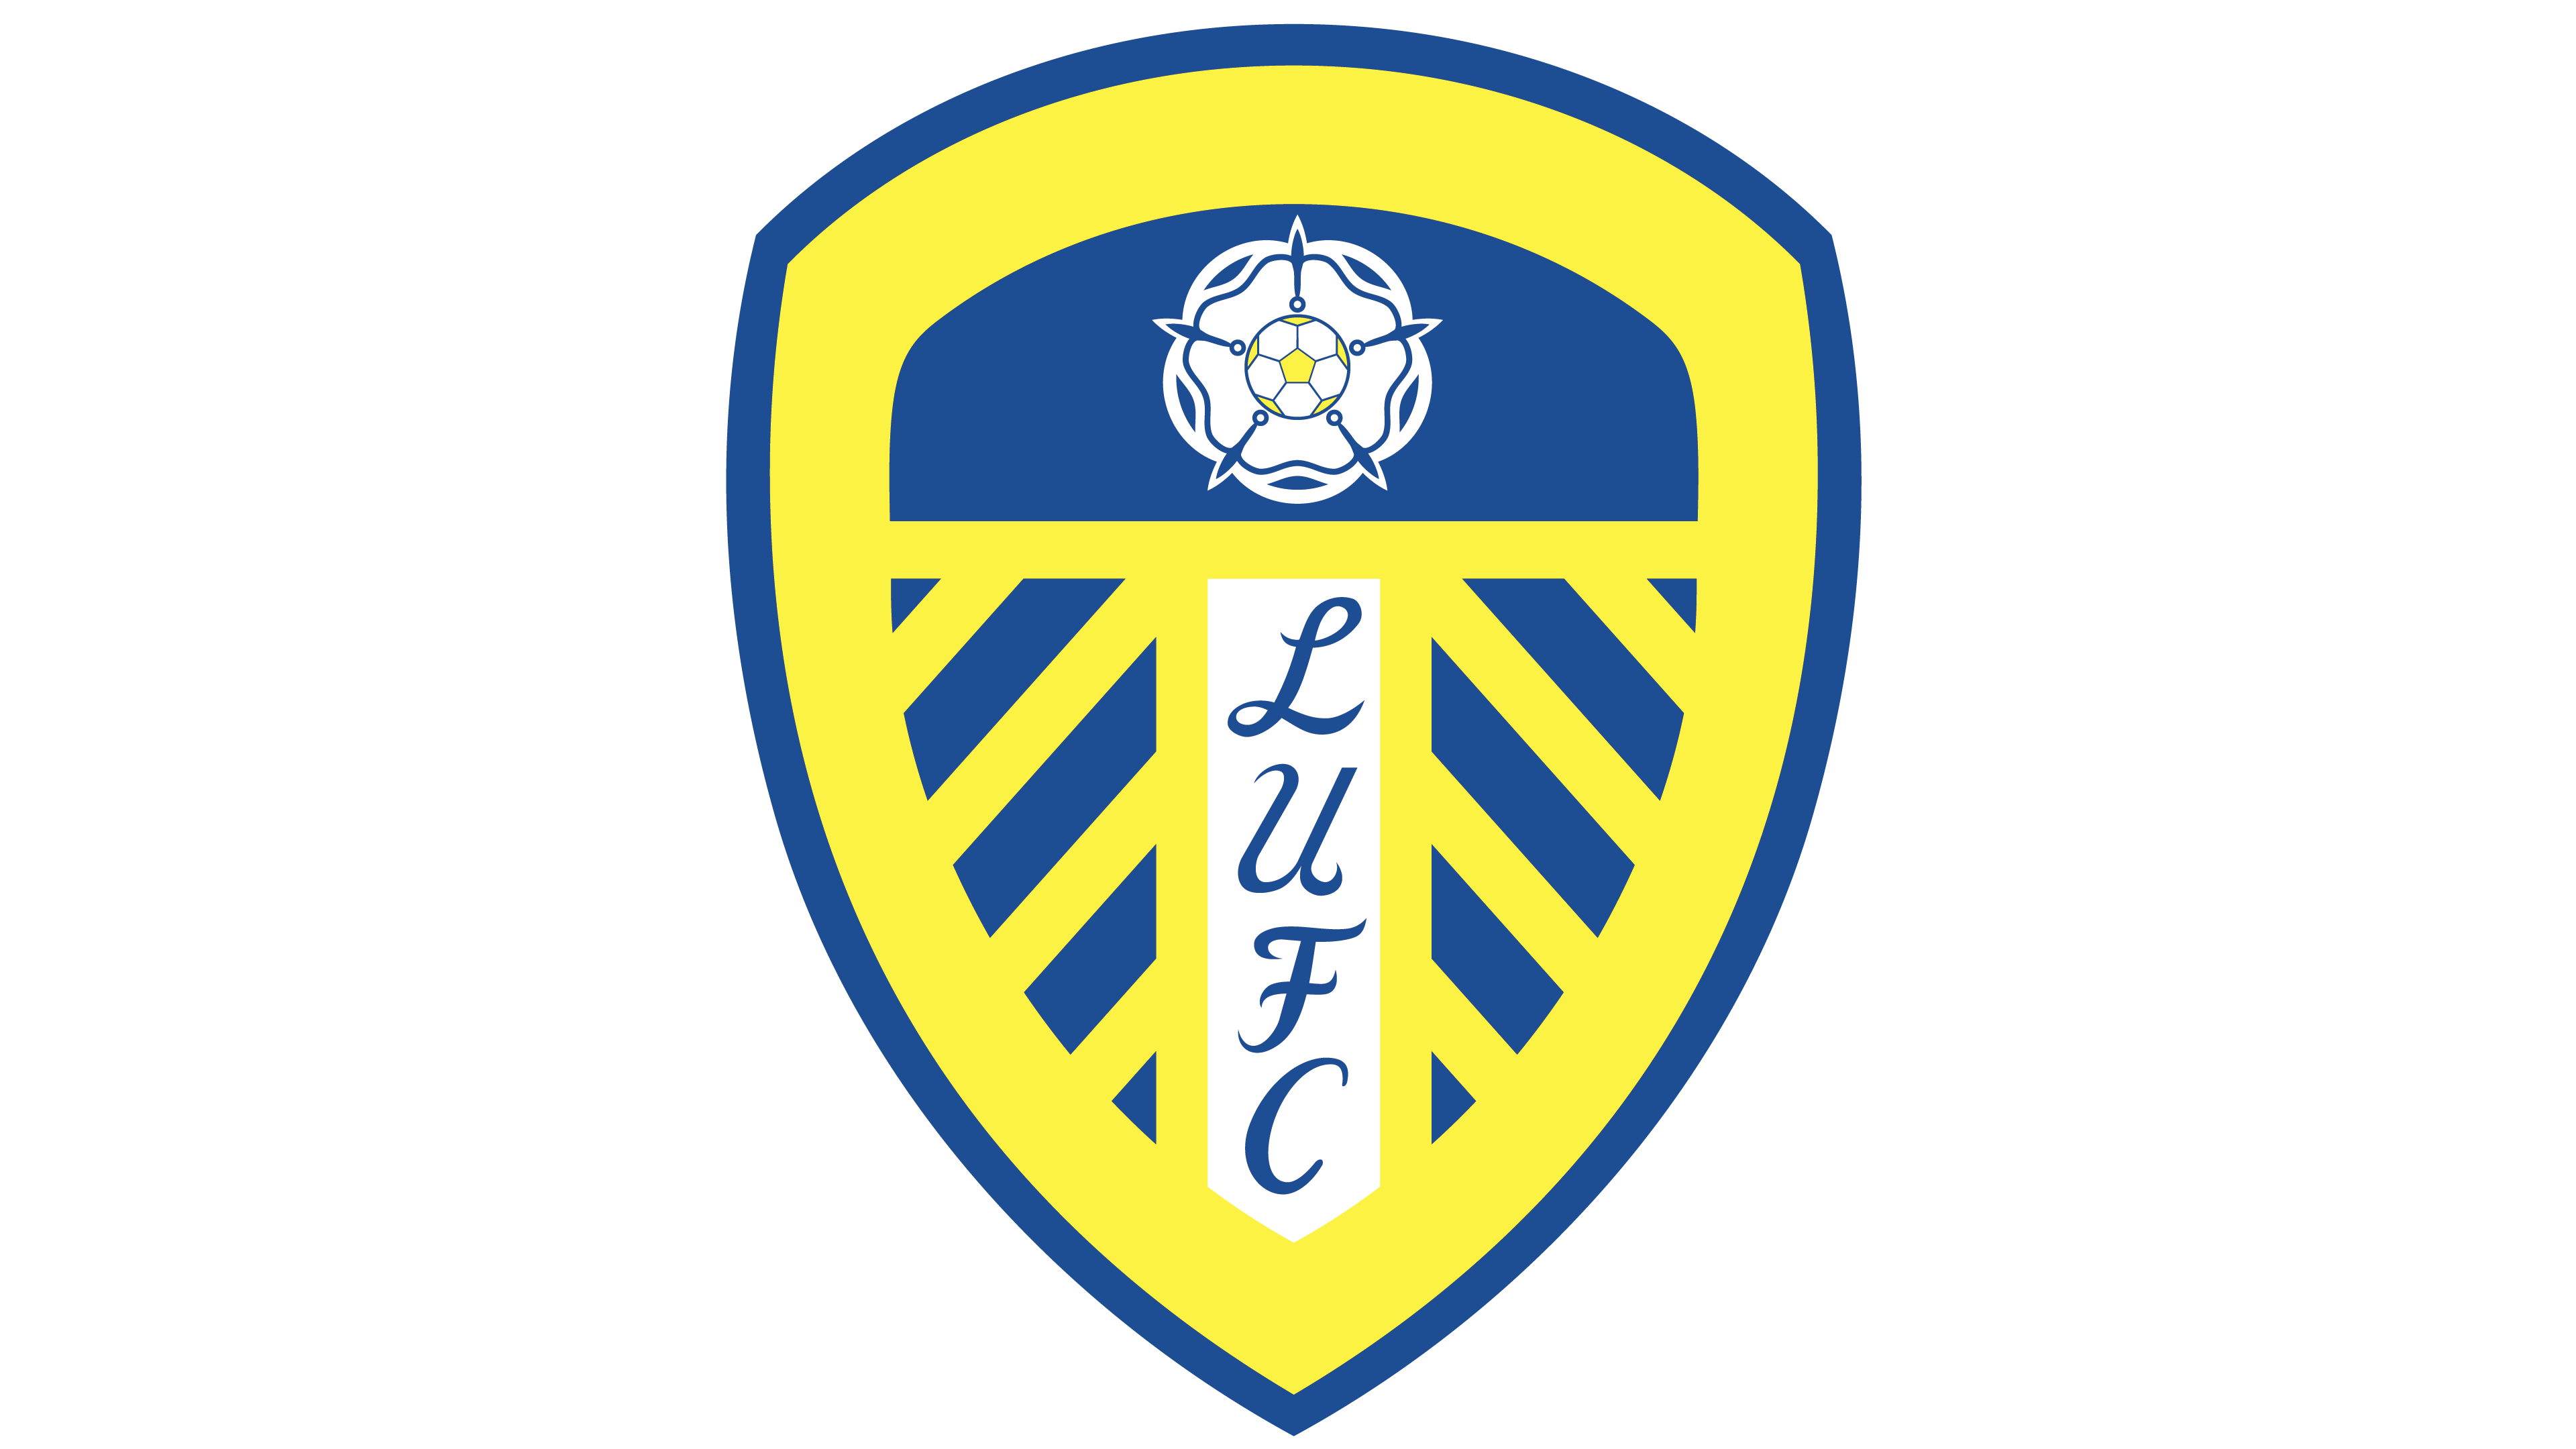 Leeds Logo - Leeds United Logo - Interesting History of the Team Name and emblem